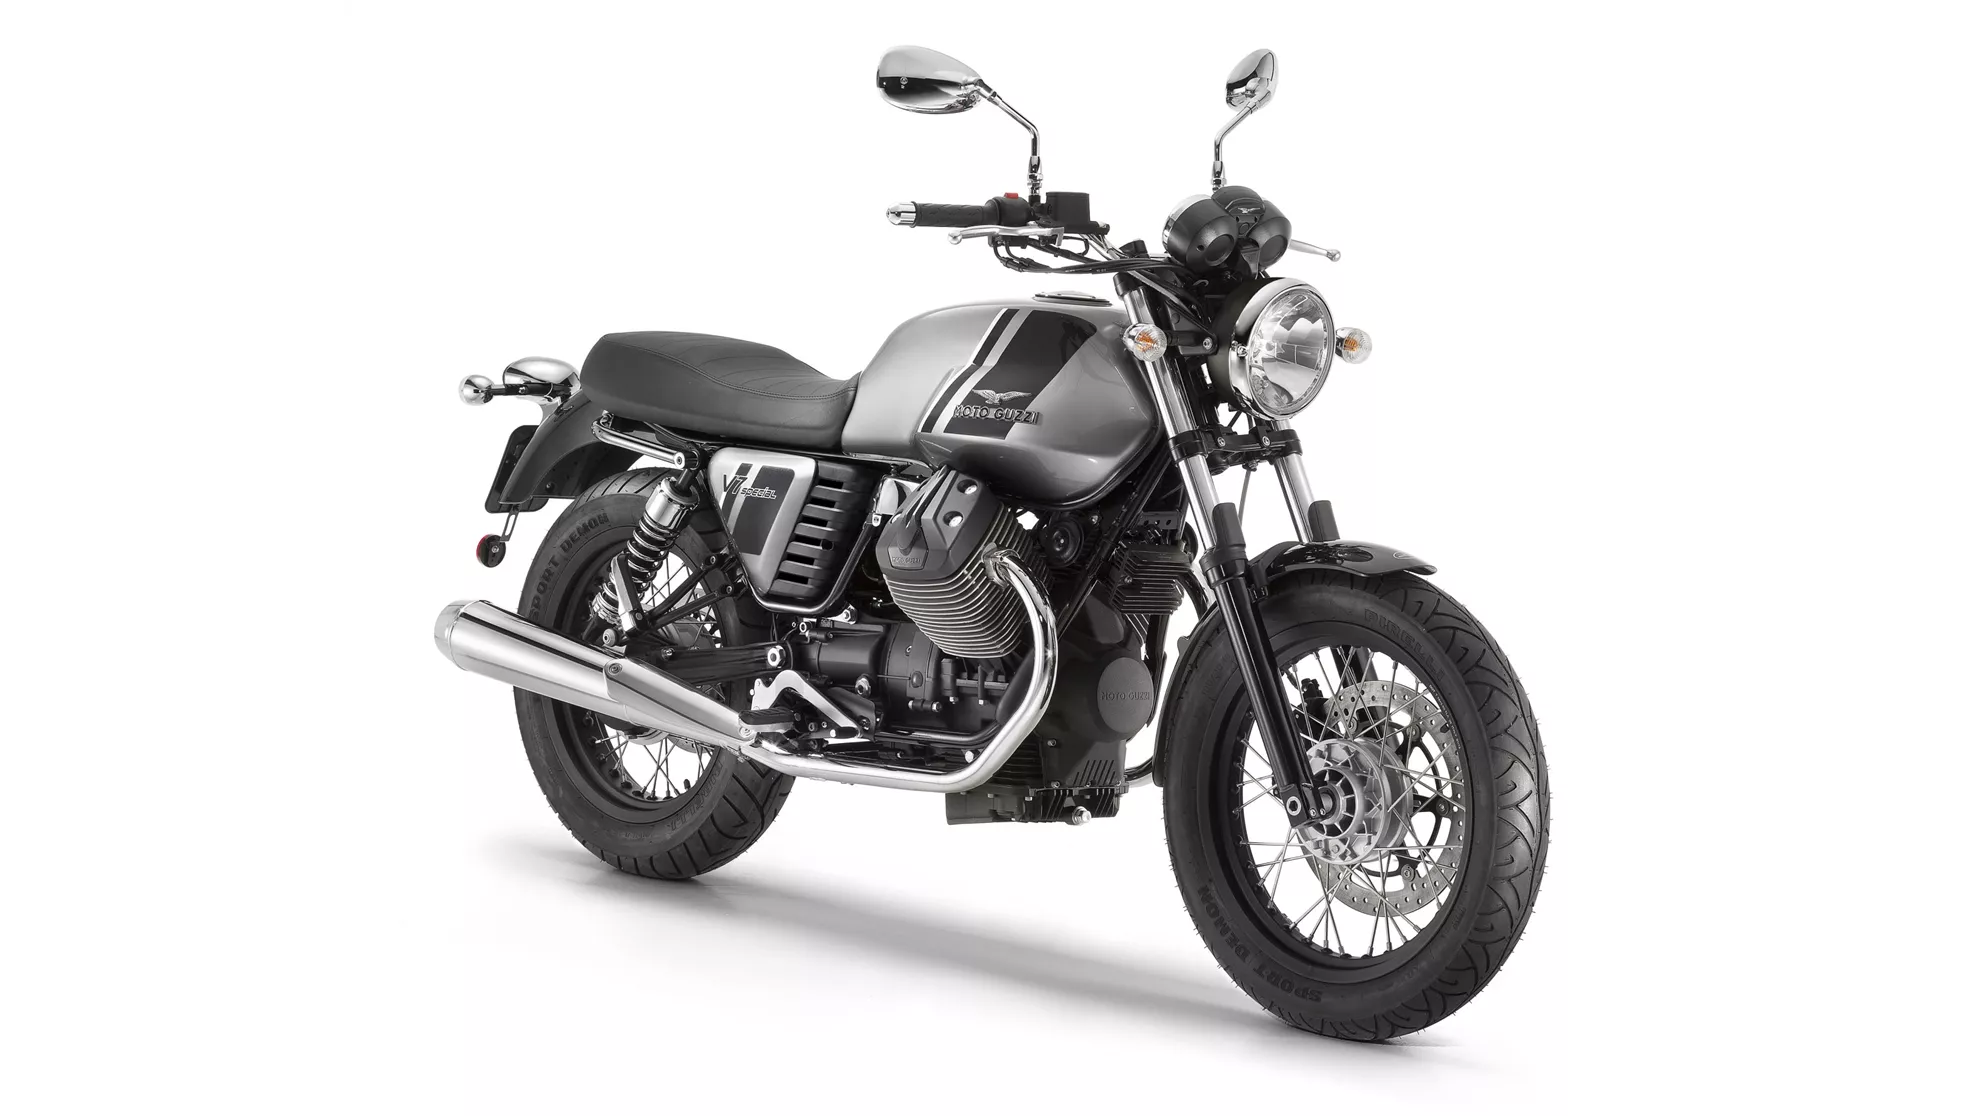 Moto Guzzi V7 750 Special - Image 1